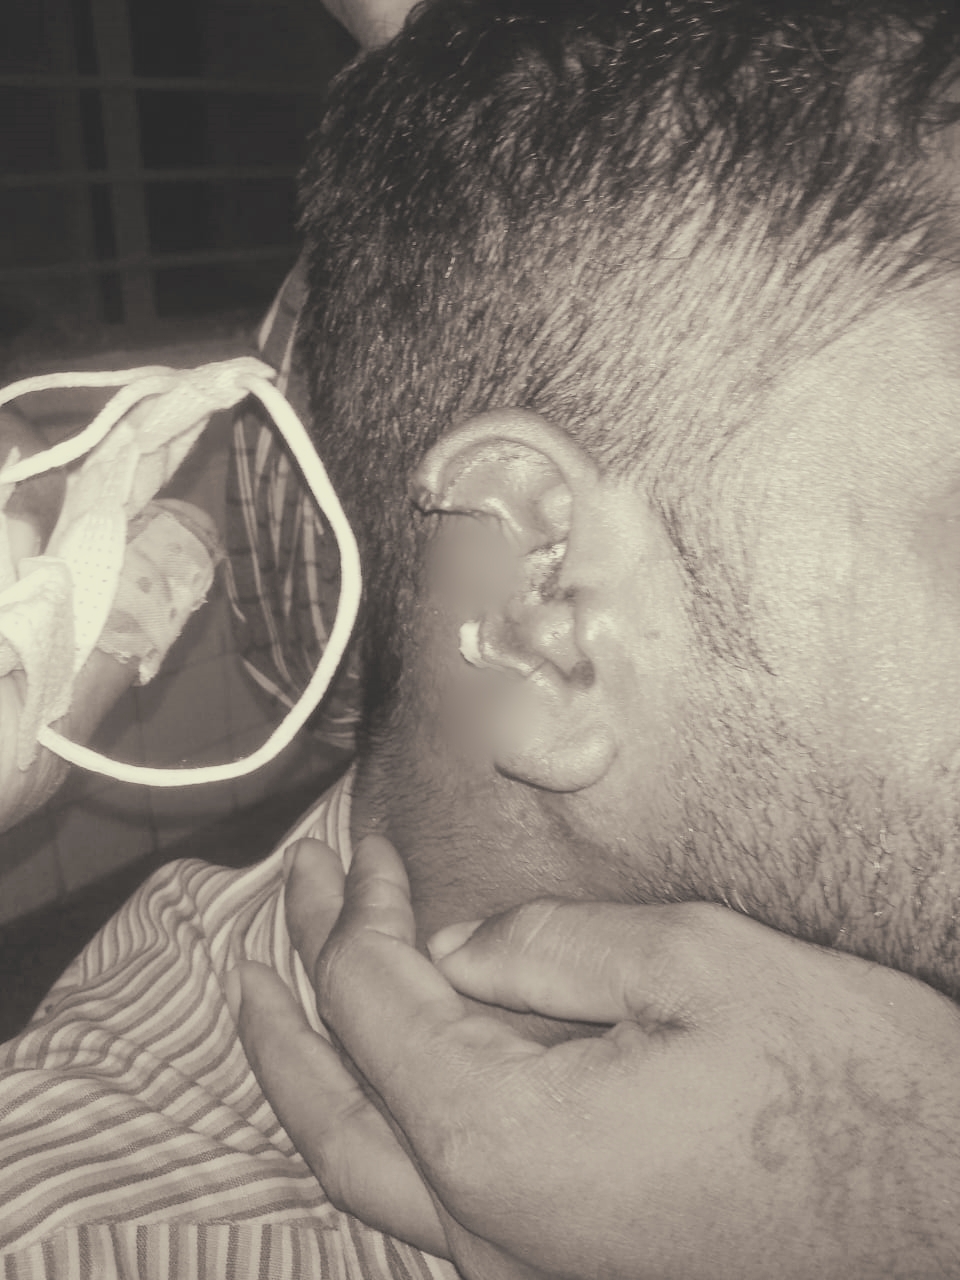 Man who bit his friend's ear arrested